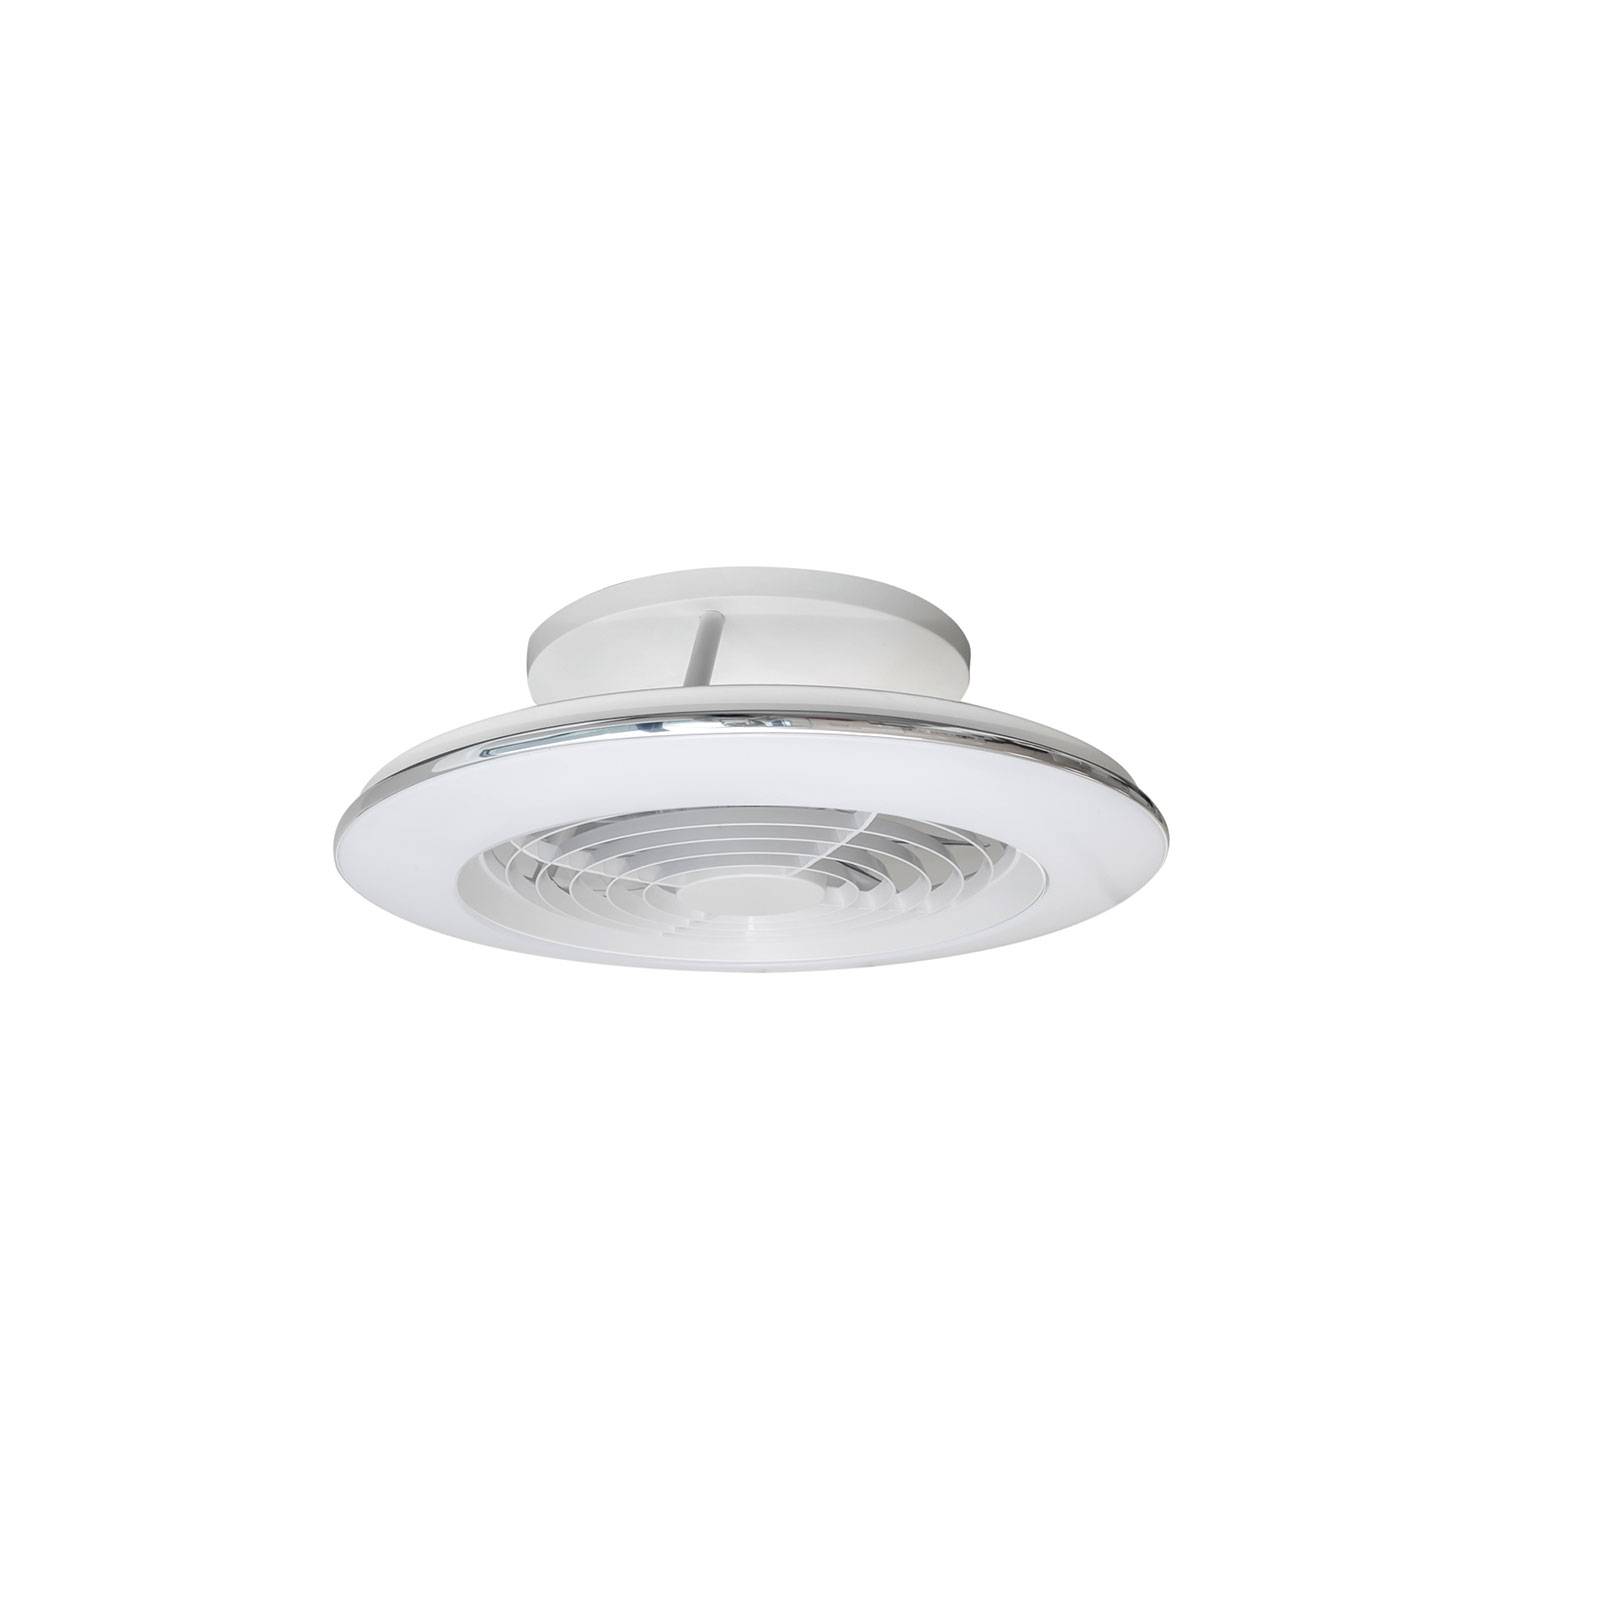 Image of Mantra Iluminación Ventilateur de plafond LED Alisio mini, blanc 8435153274930